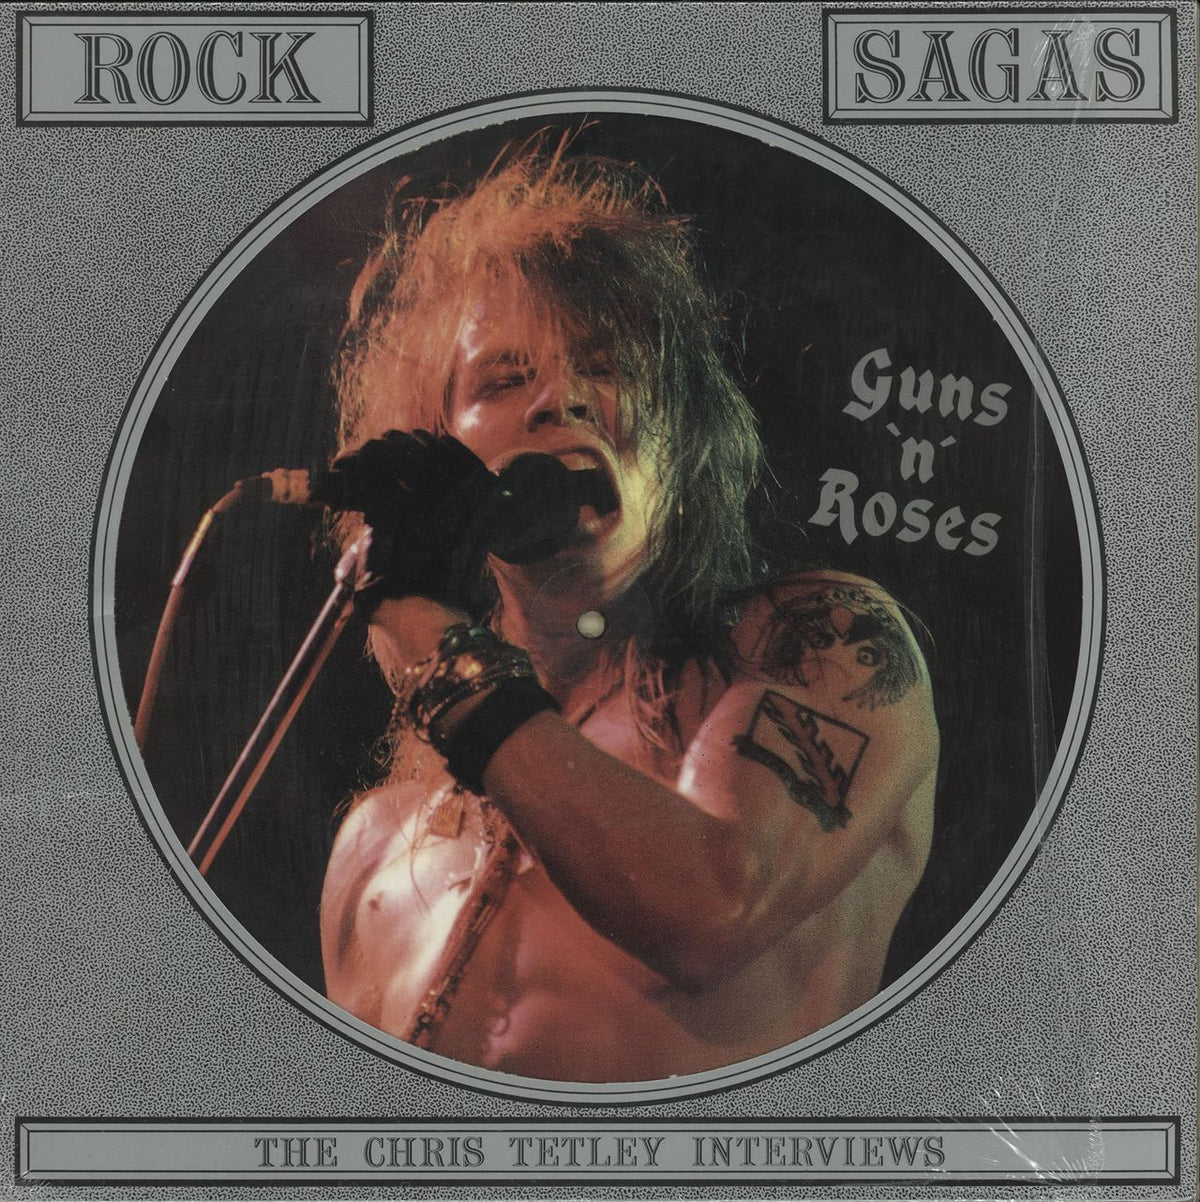 Guns N Roses The Chris Tetley Interviews UK Picture disc LP 